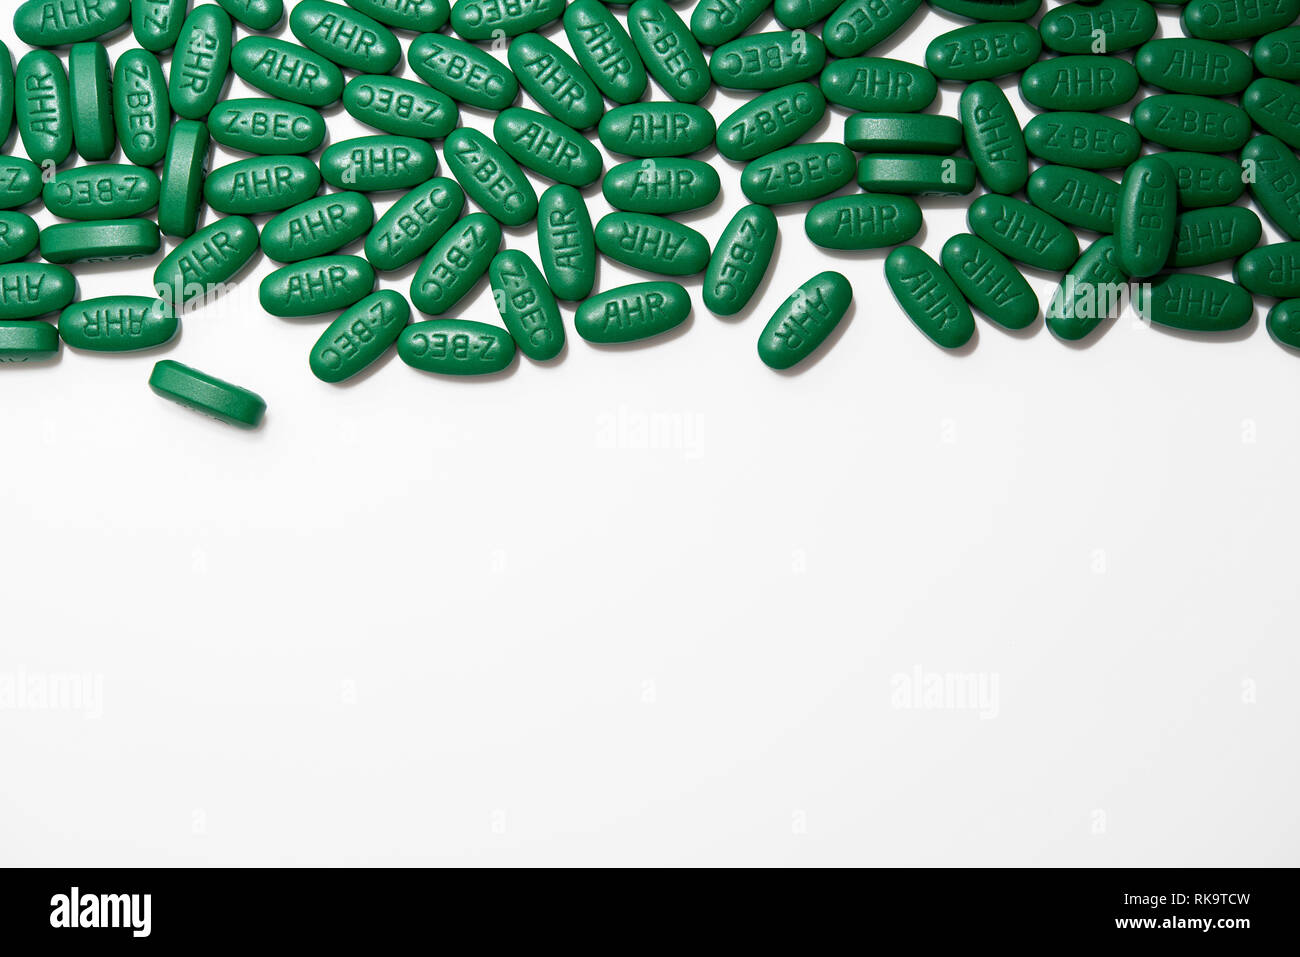 Grüne tabletten Vitamine, Nahrungsergänzungsmittel Pillen Stockfotografie -  Alamy